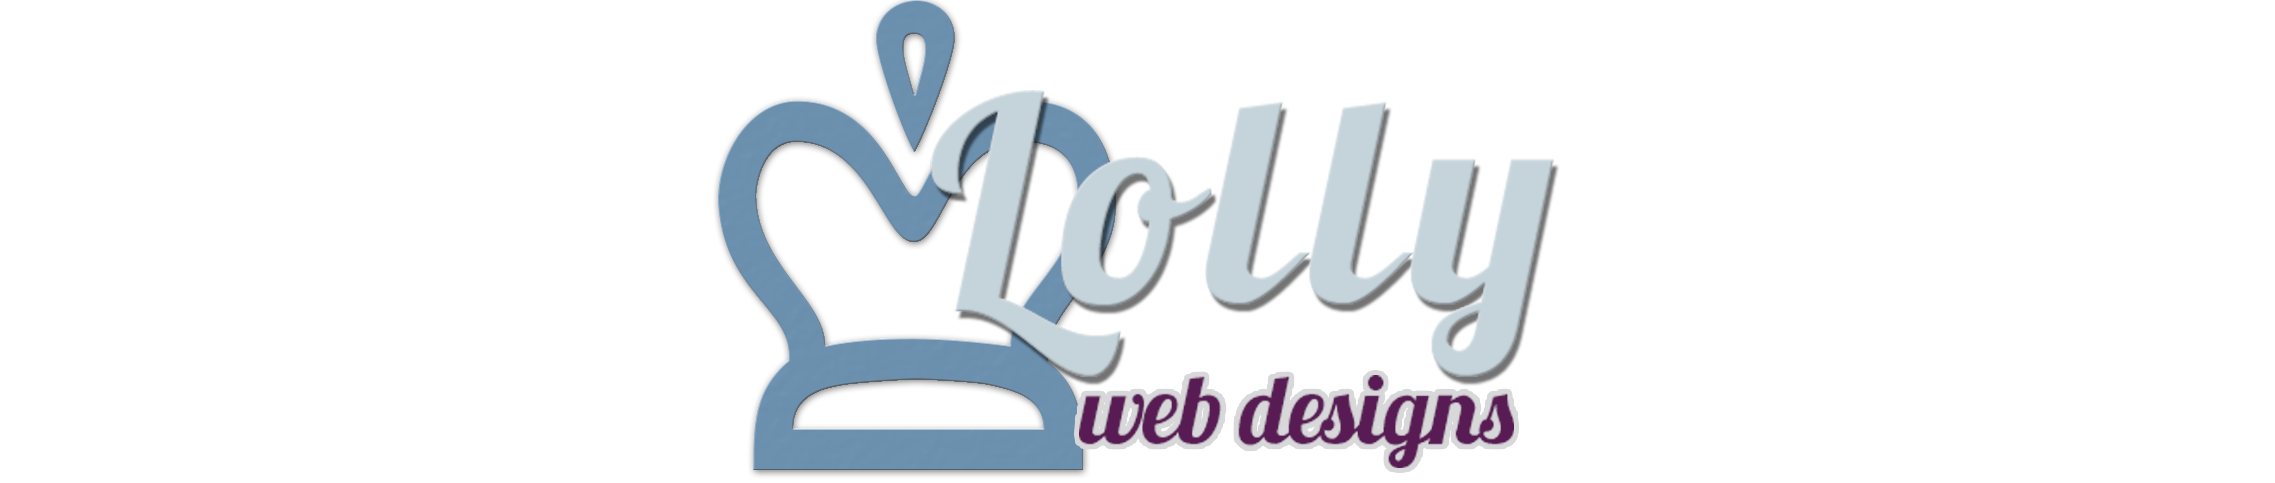 Lolly Web Designs by Arbel